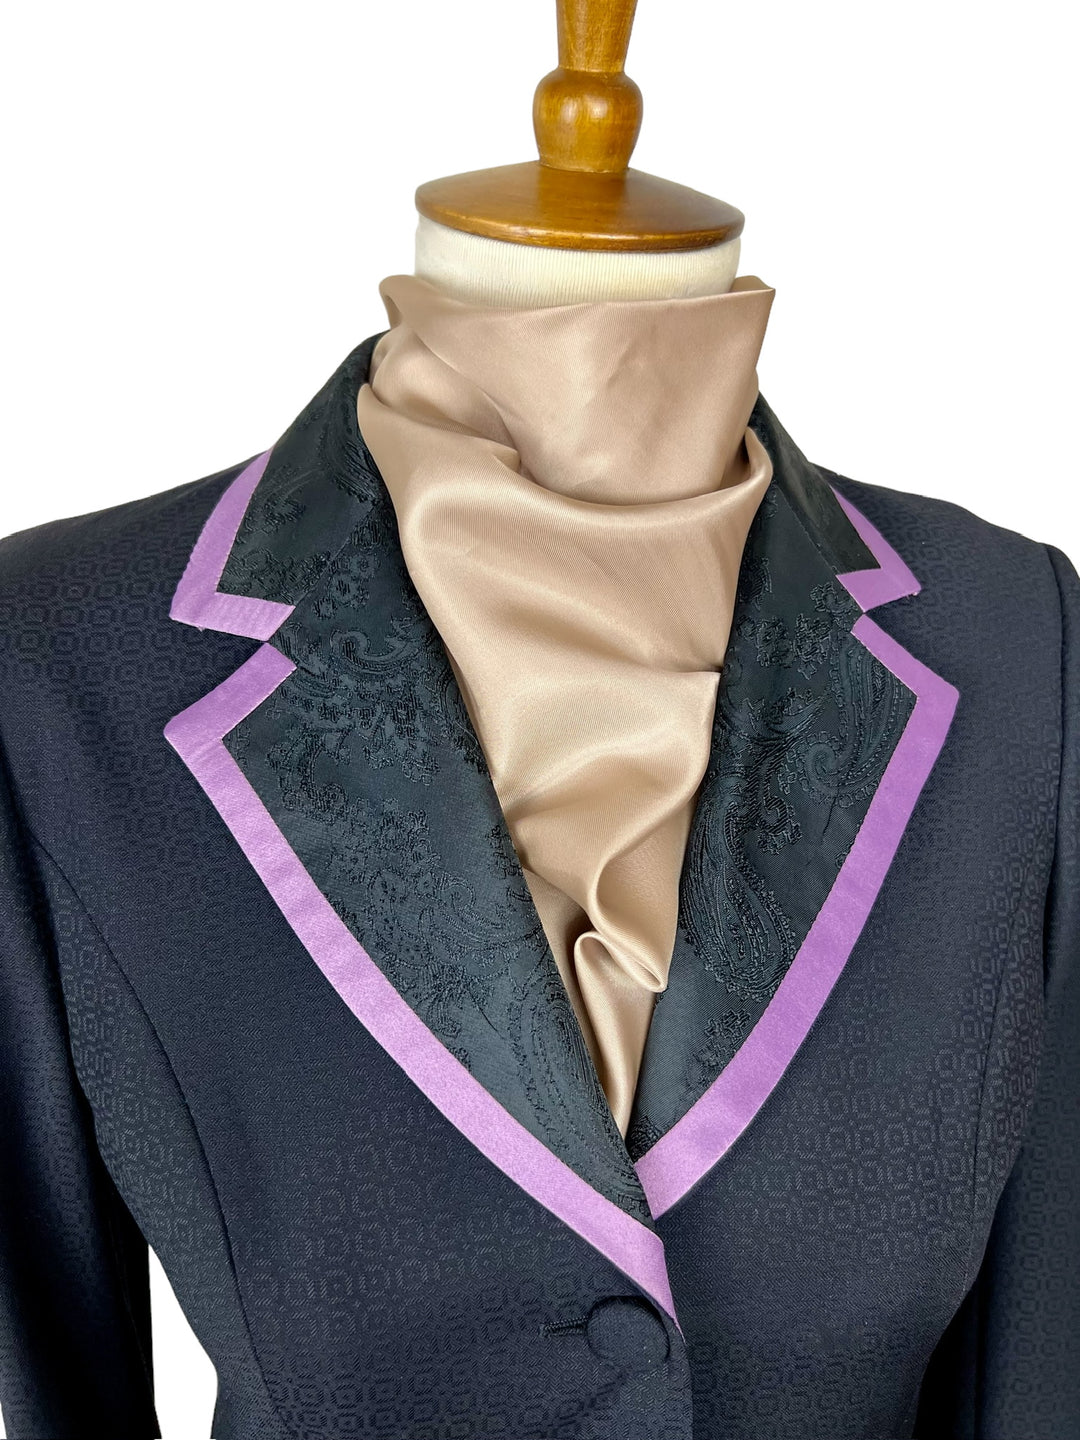 Black Showmanship Suit with Purple Accents (Size 0/2), Matching Shirt & 2 Scarves